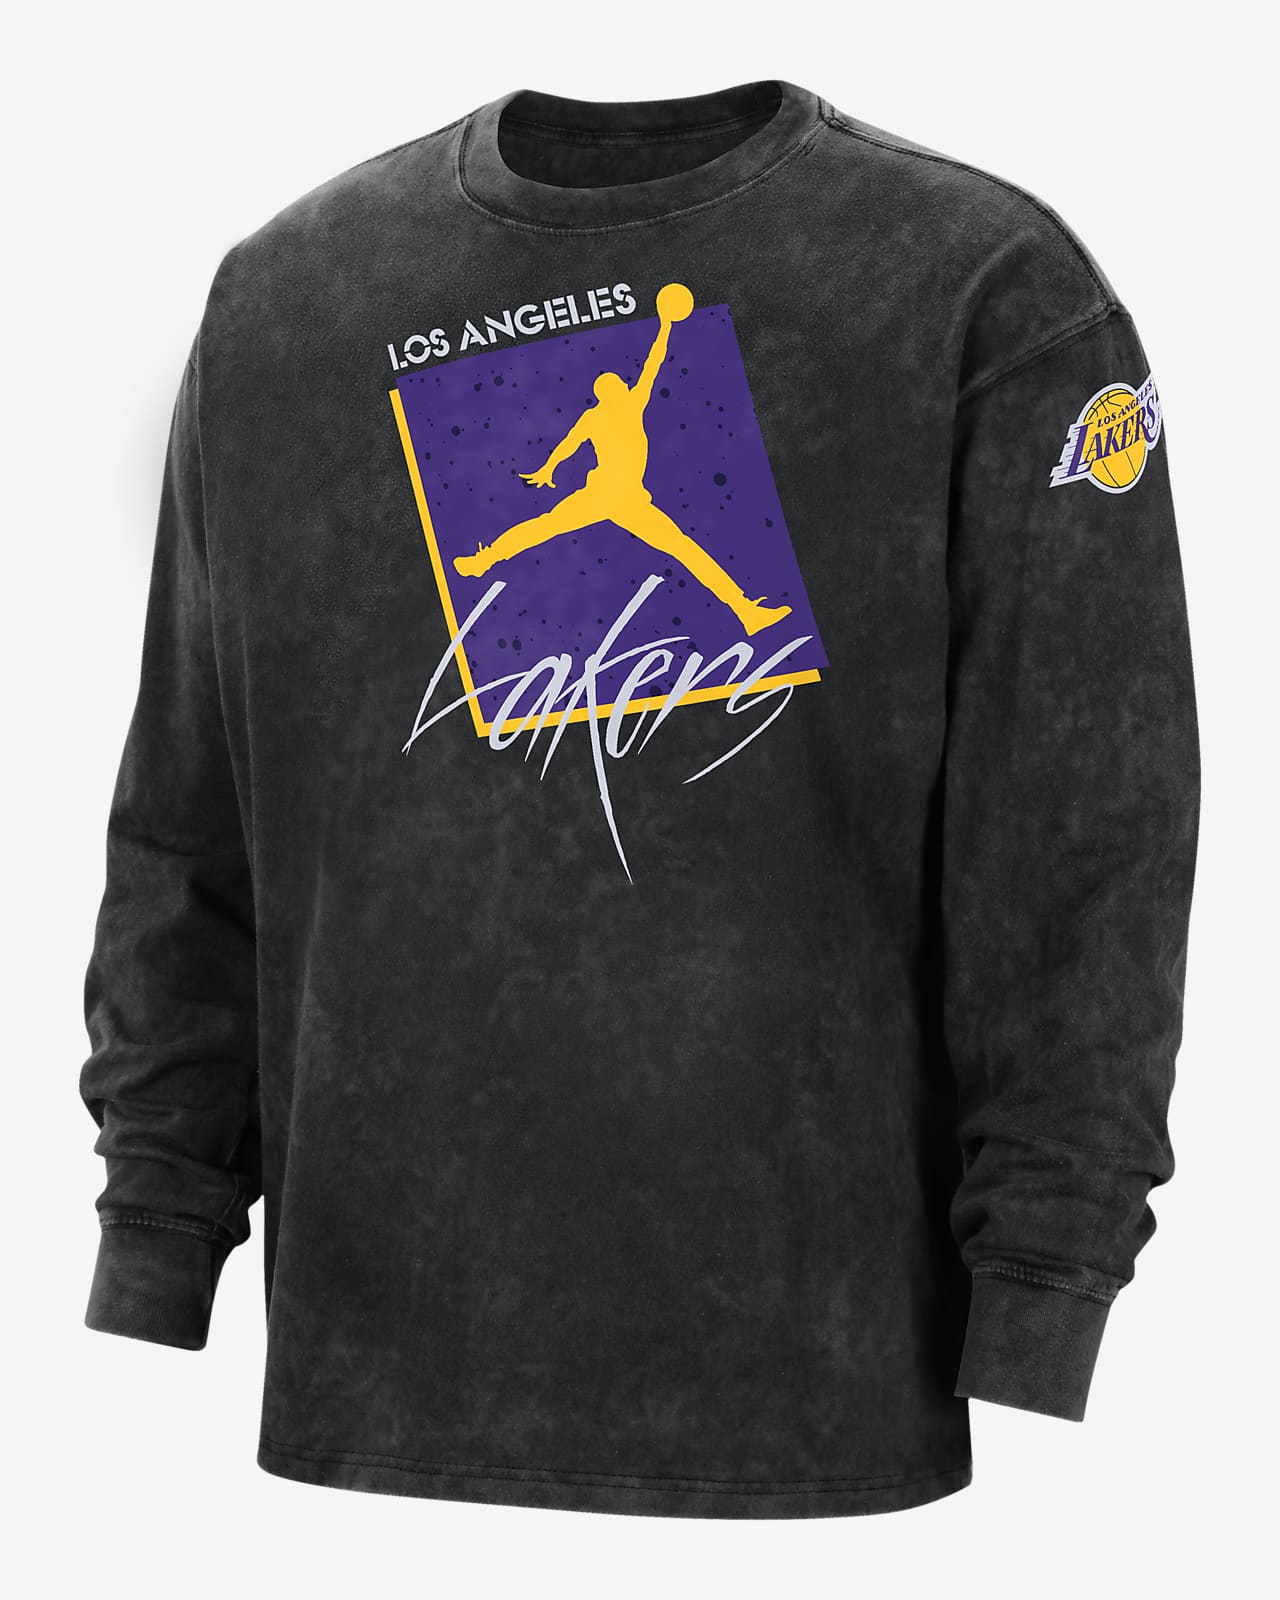 Los Angeles Lakers Courtside Statement Edition Jordan Max90 NBA-Langarm-T-Shirt für Herren